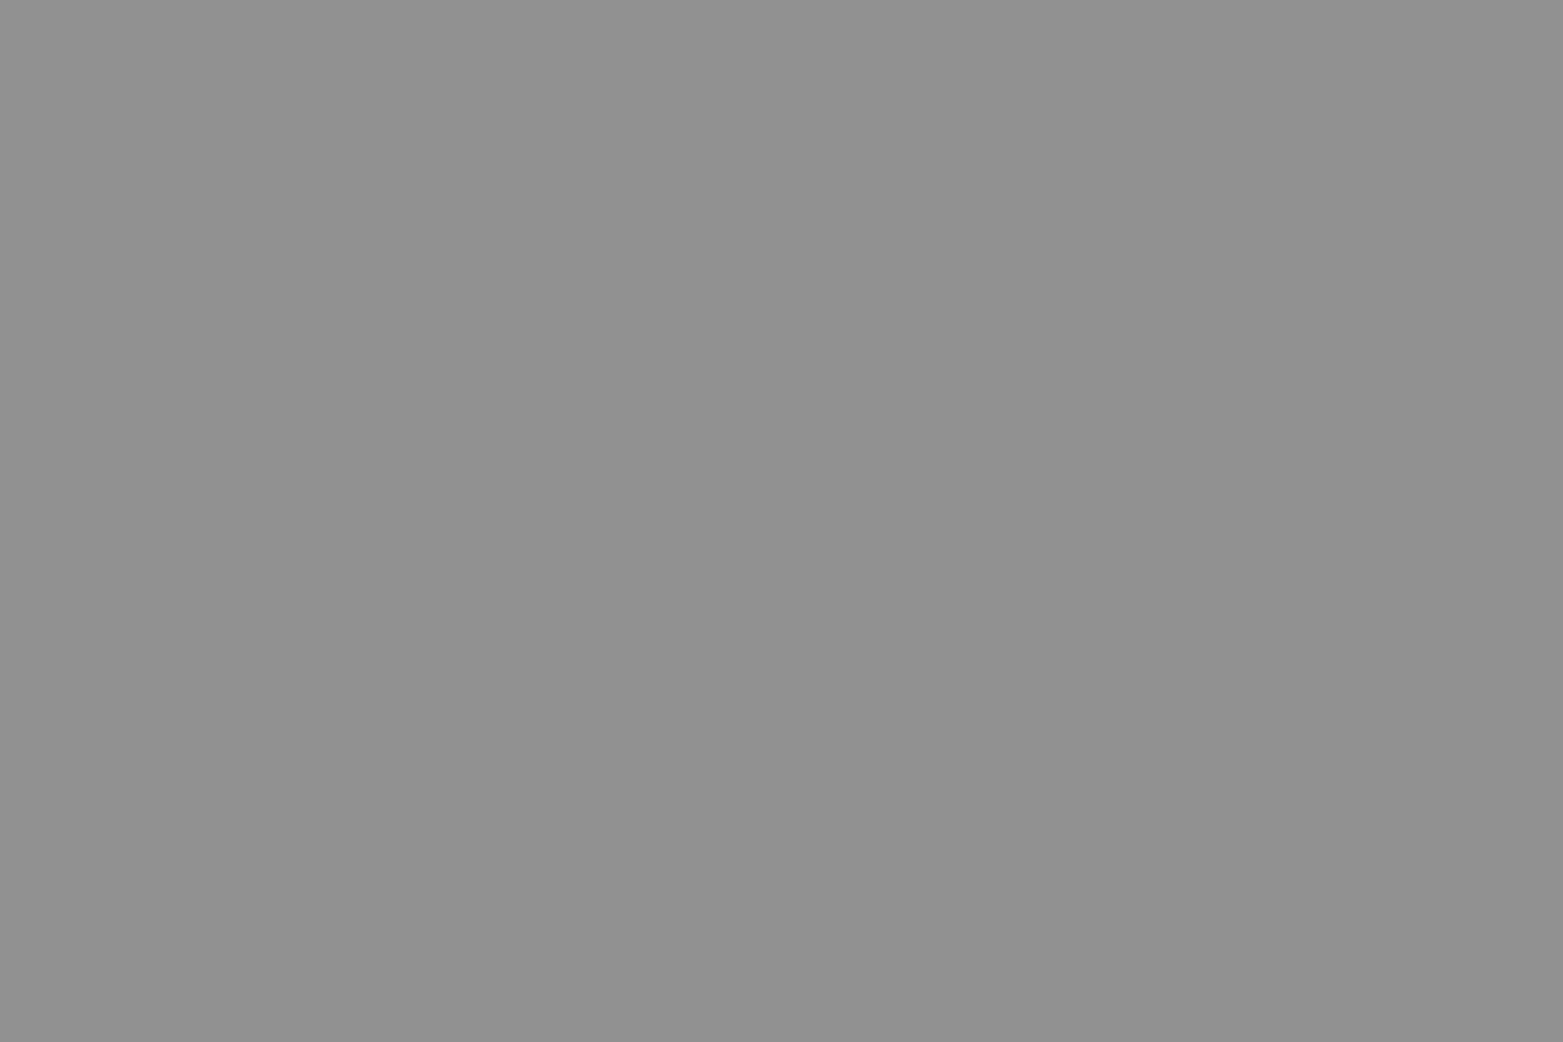 Гостиница «Мариино» на набережной, Ялта. Открытка 1905 года. Фотография: <a href="https://commons.wikimedia.org/w/index.php?curid=18789728" target="_blank" rel="noopener">commons.wikimedia</a> / Public Domain